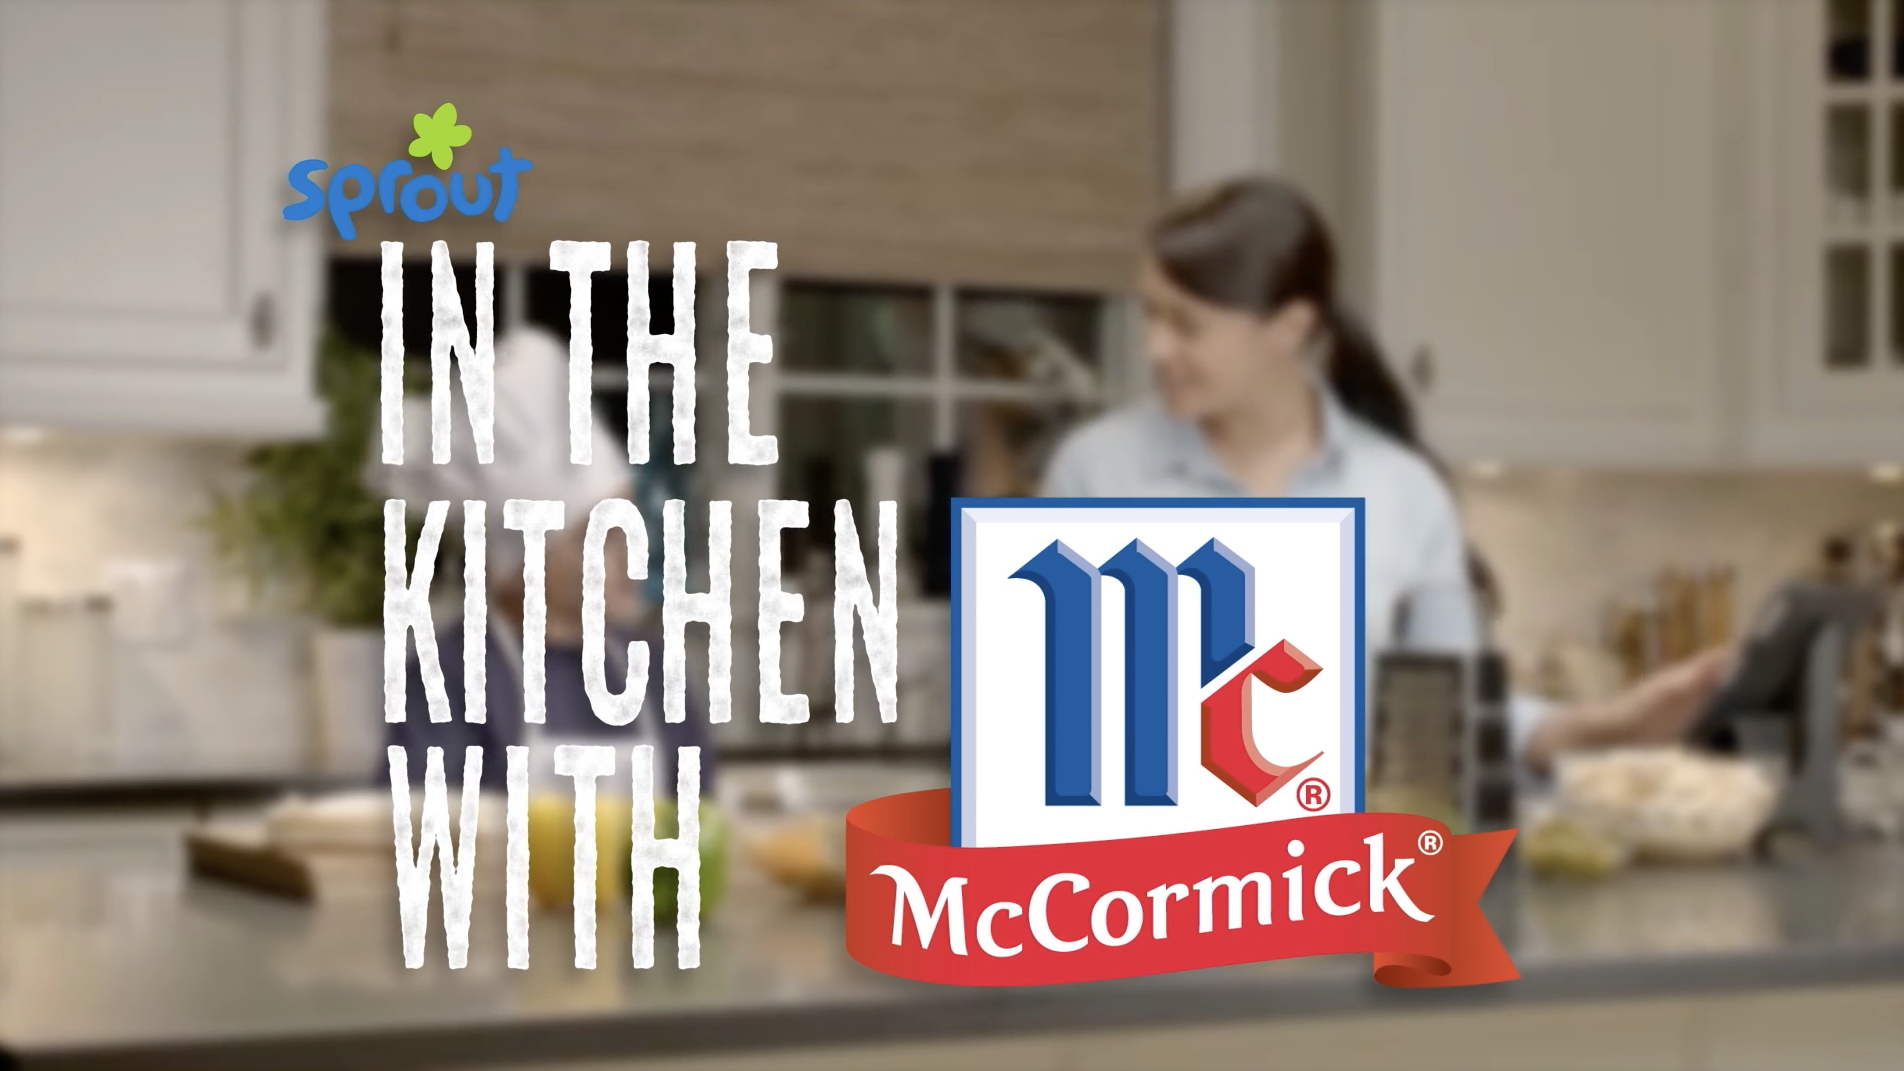 McCormick, Kitchen